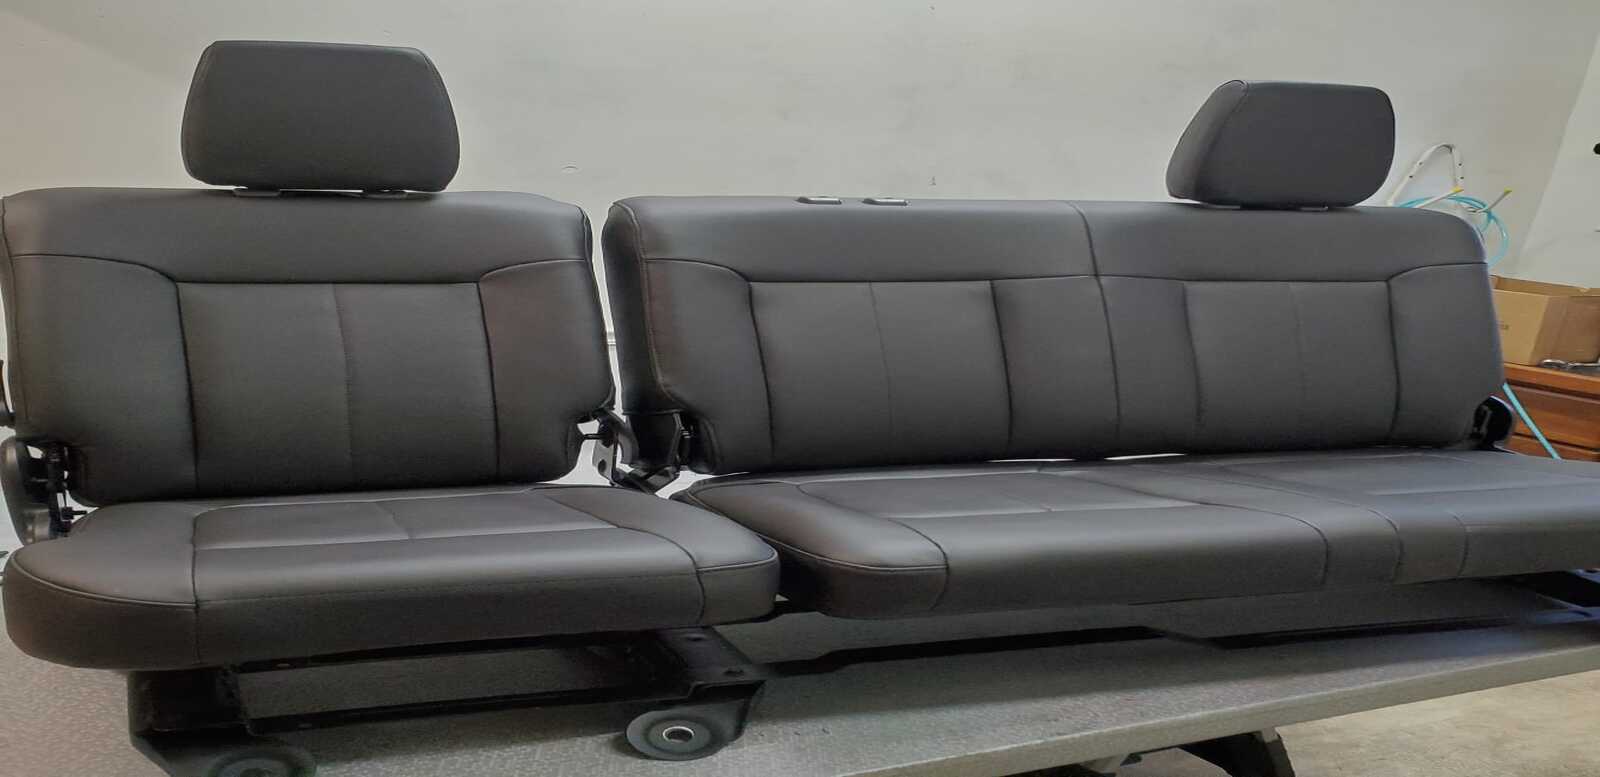 Full truck seat Re-upholstery